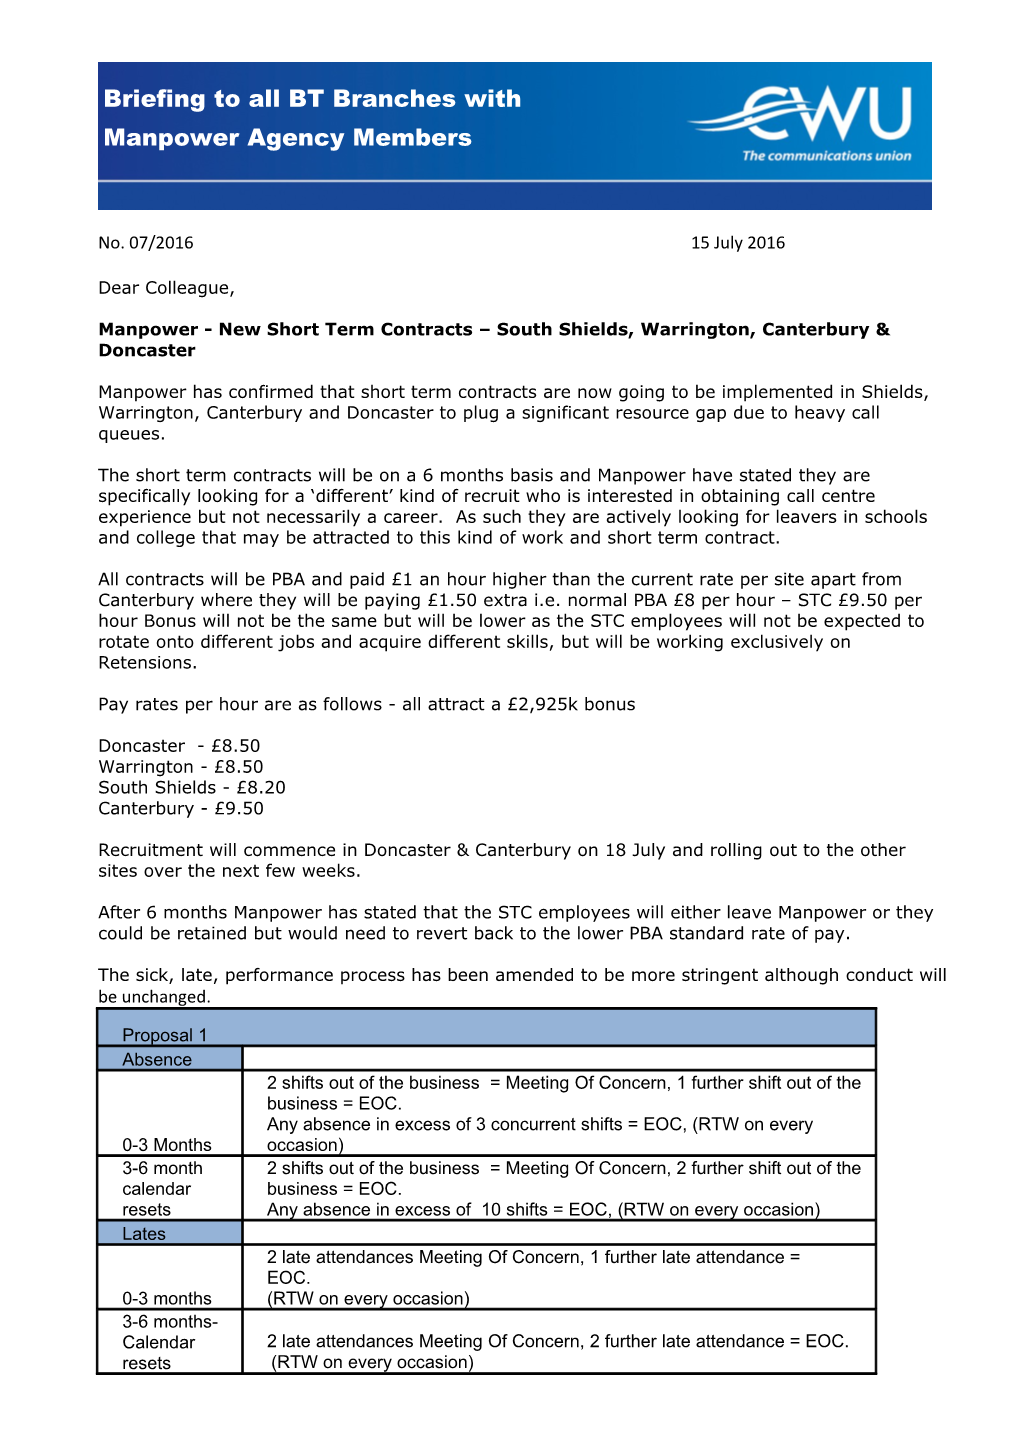 Manpower - New Short Term Contracts South Shields, Warrington, Canterbury & Doncaster